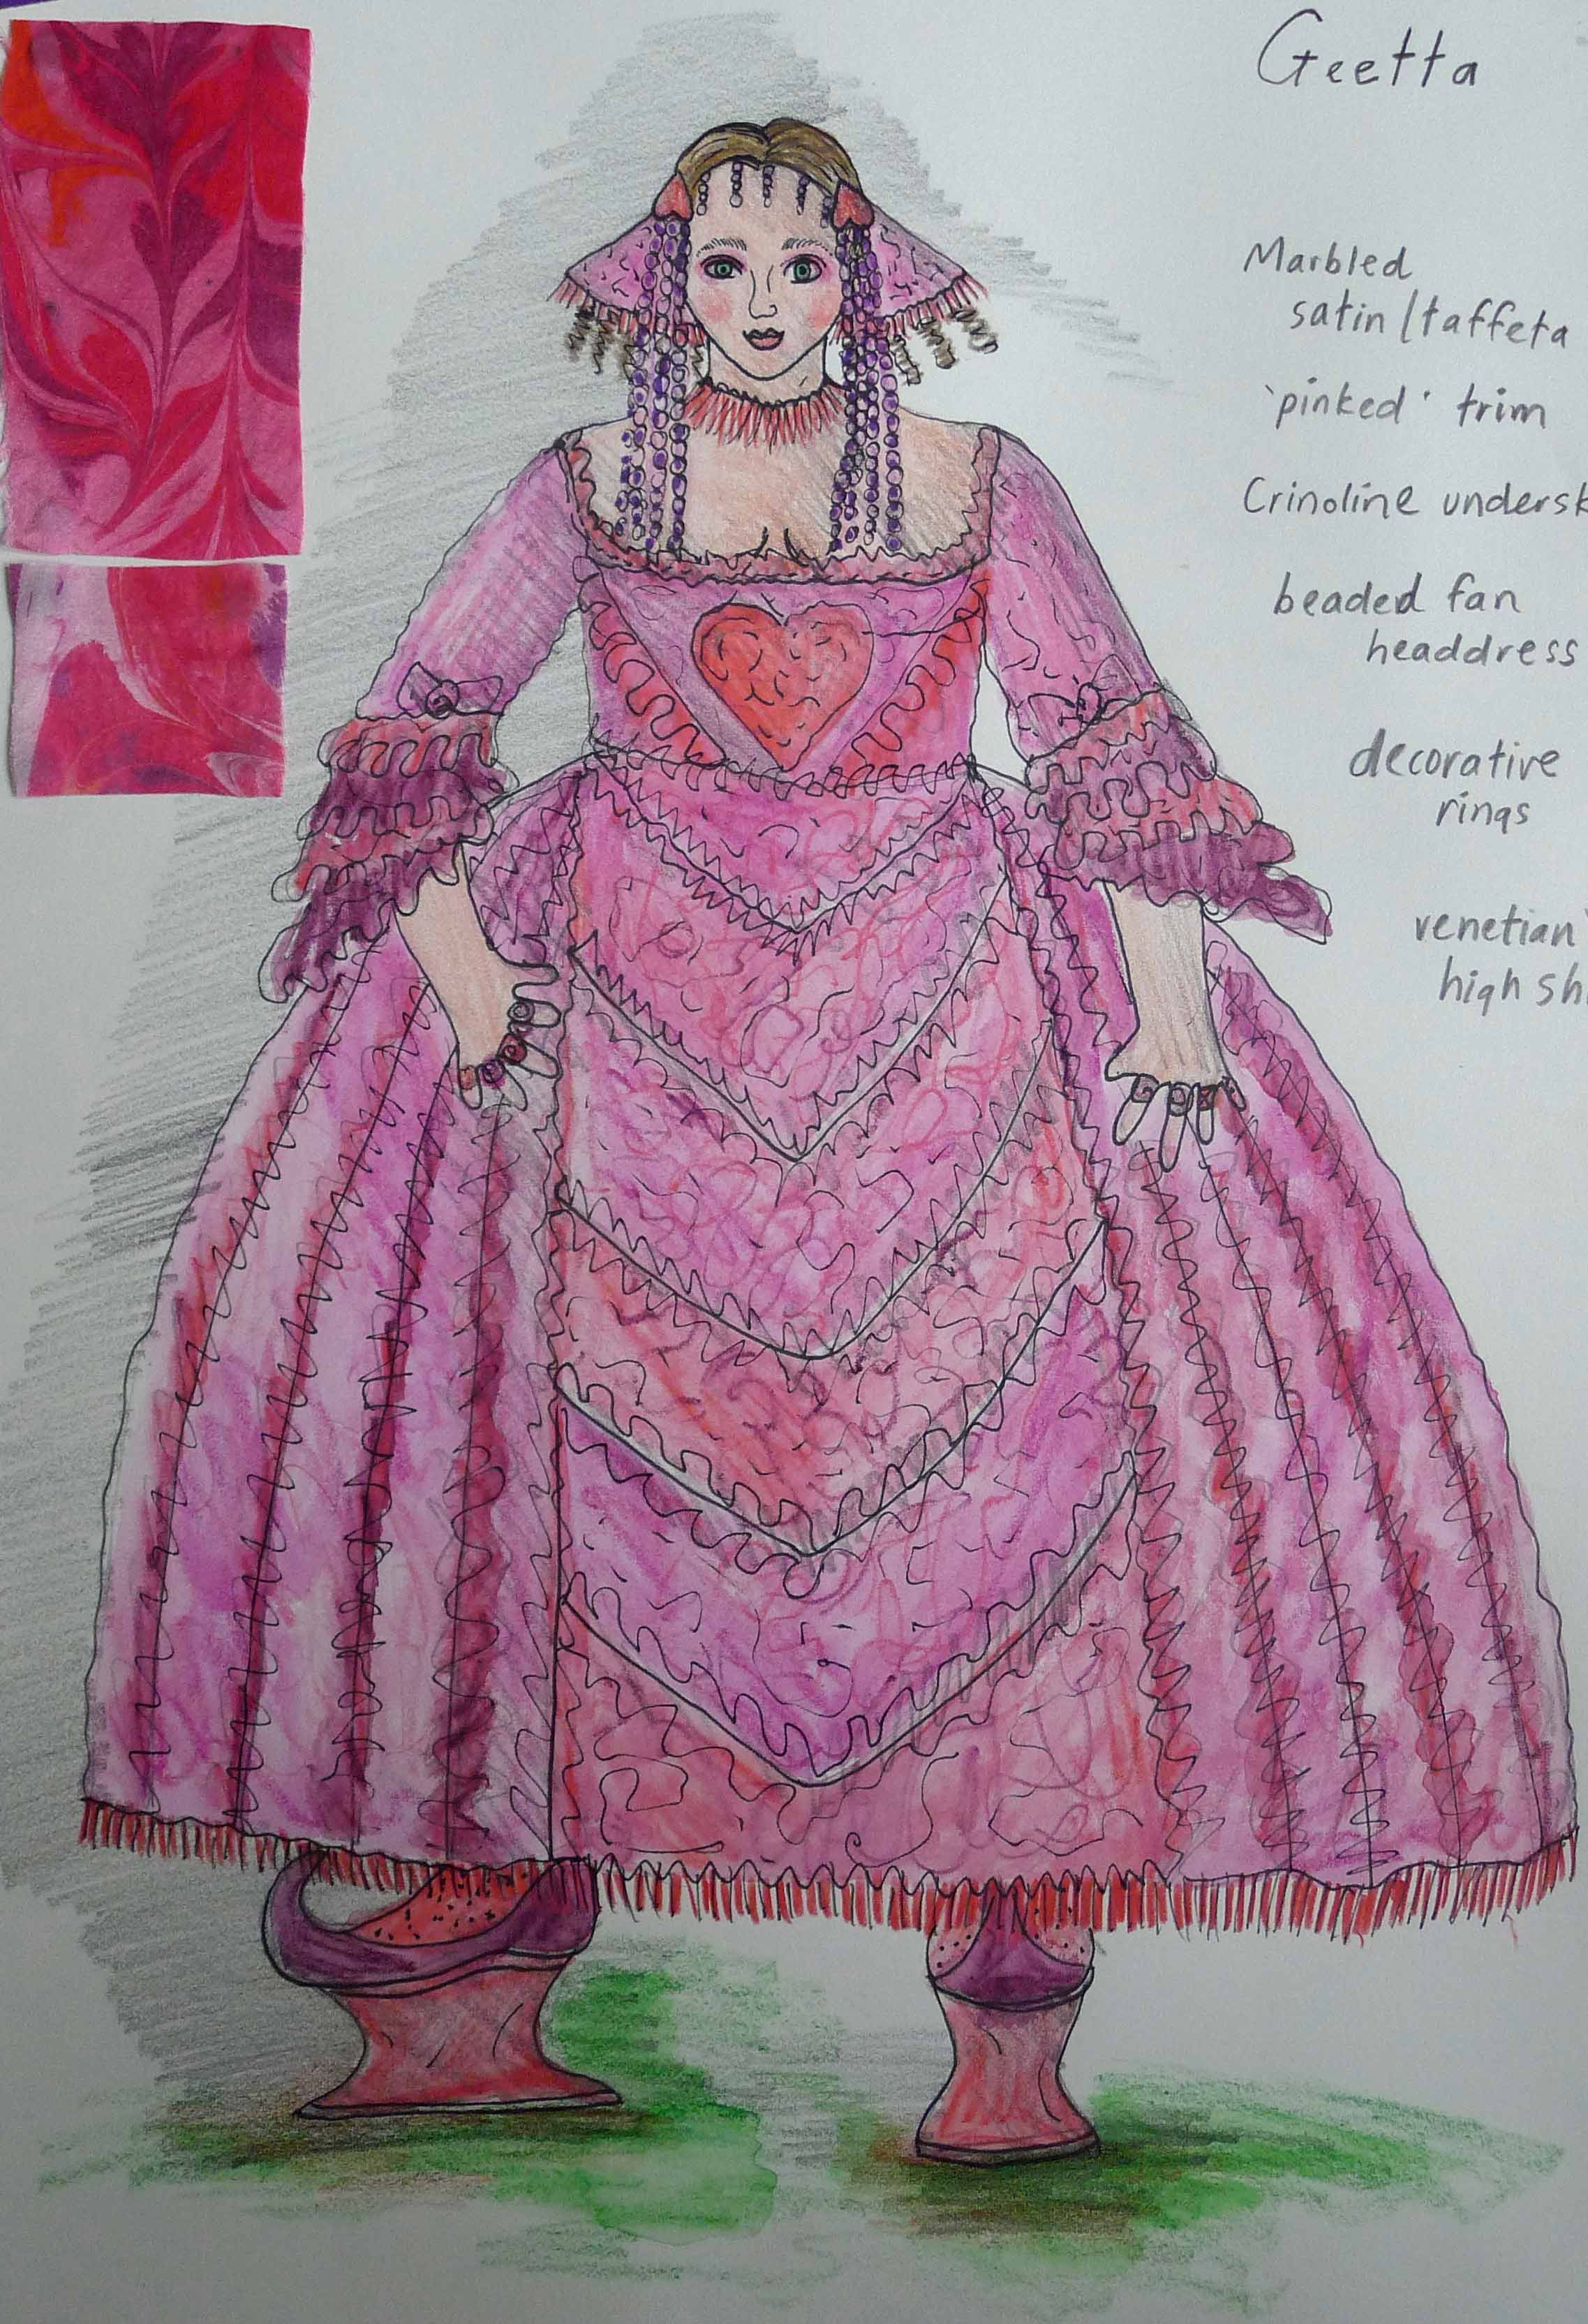  Geetta costume drawing 